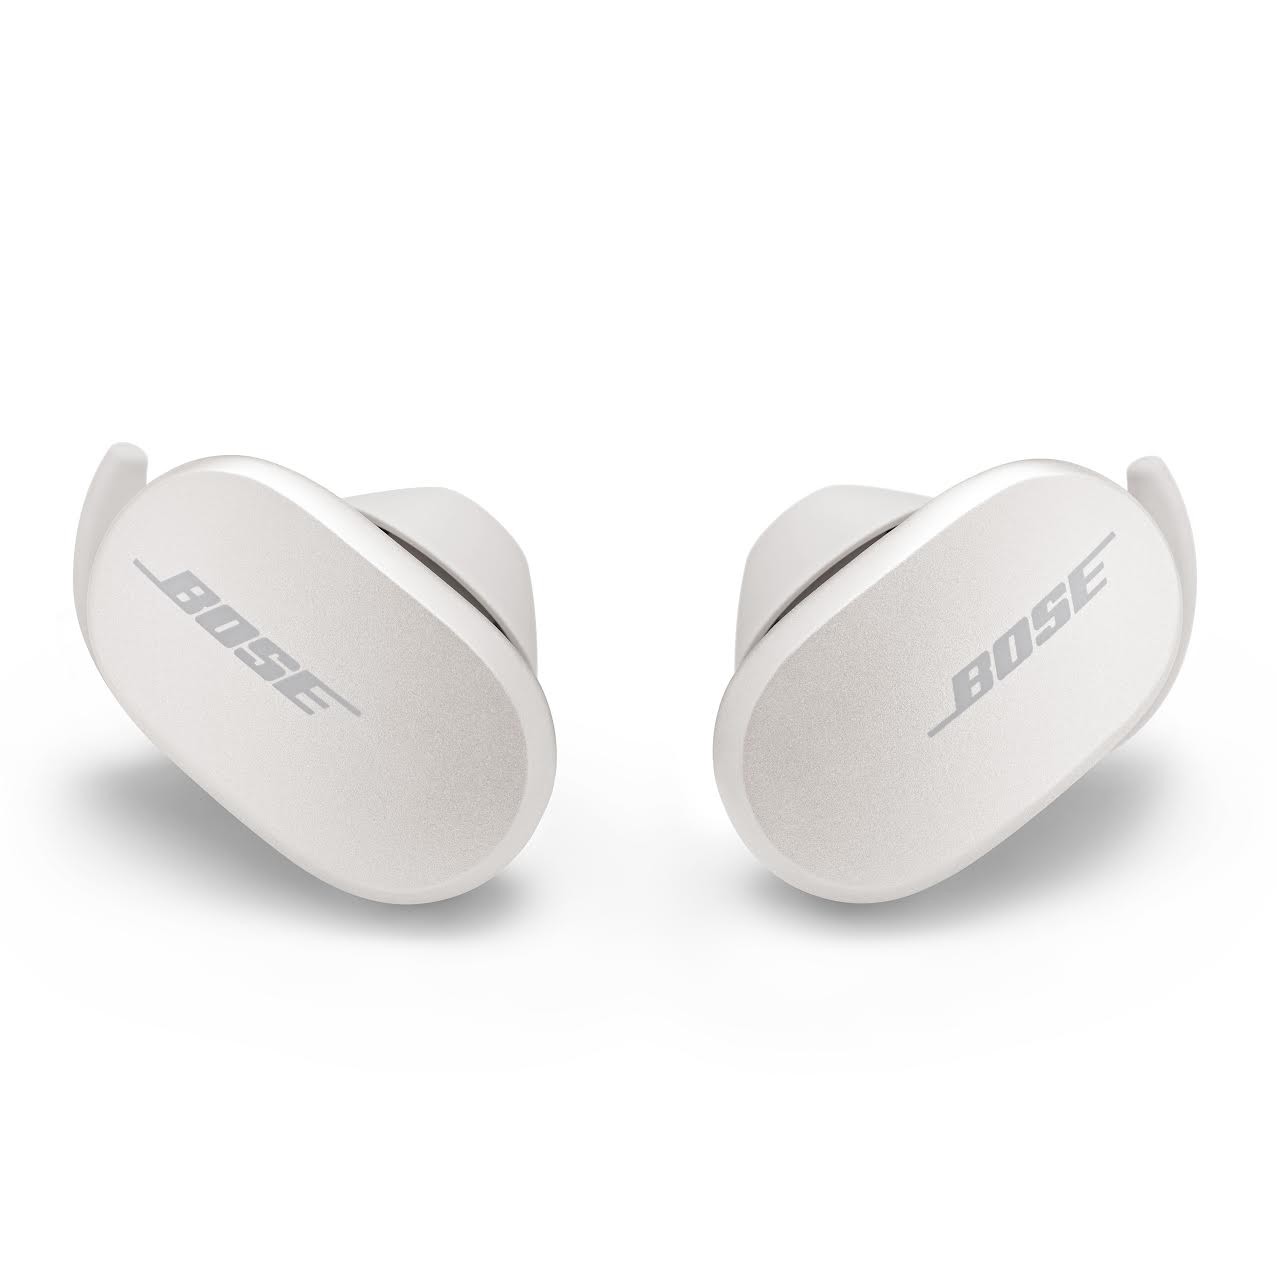 Bose 全新真無線耳機Bose QuietComfort Earbuds 、 Bose Sport Earbuds